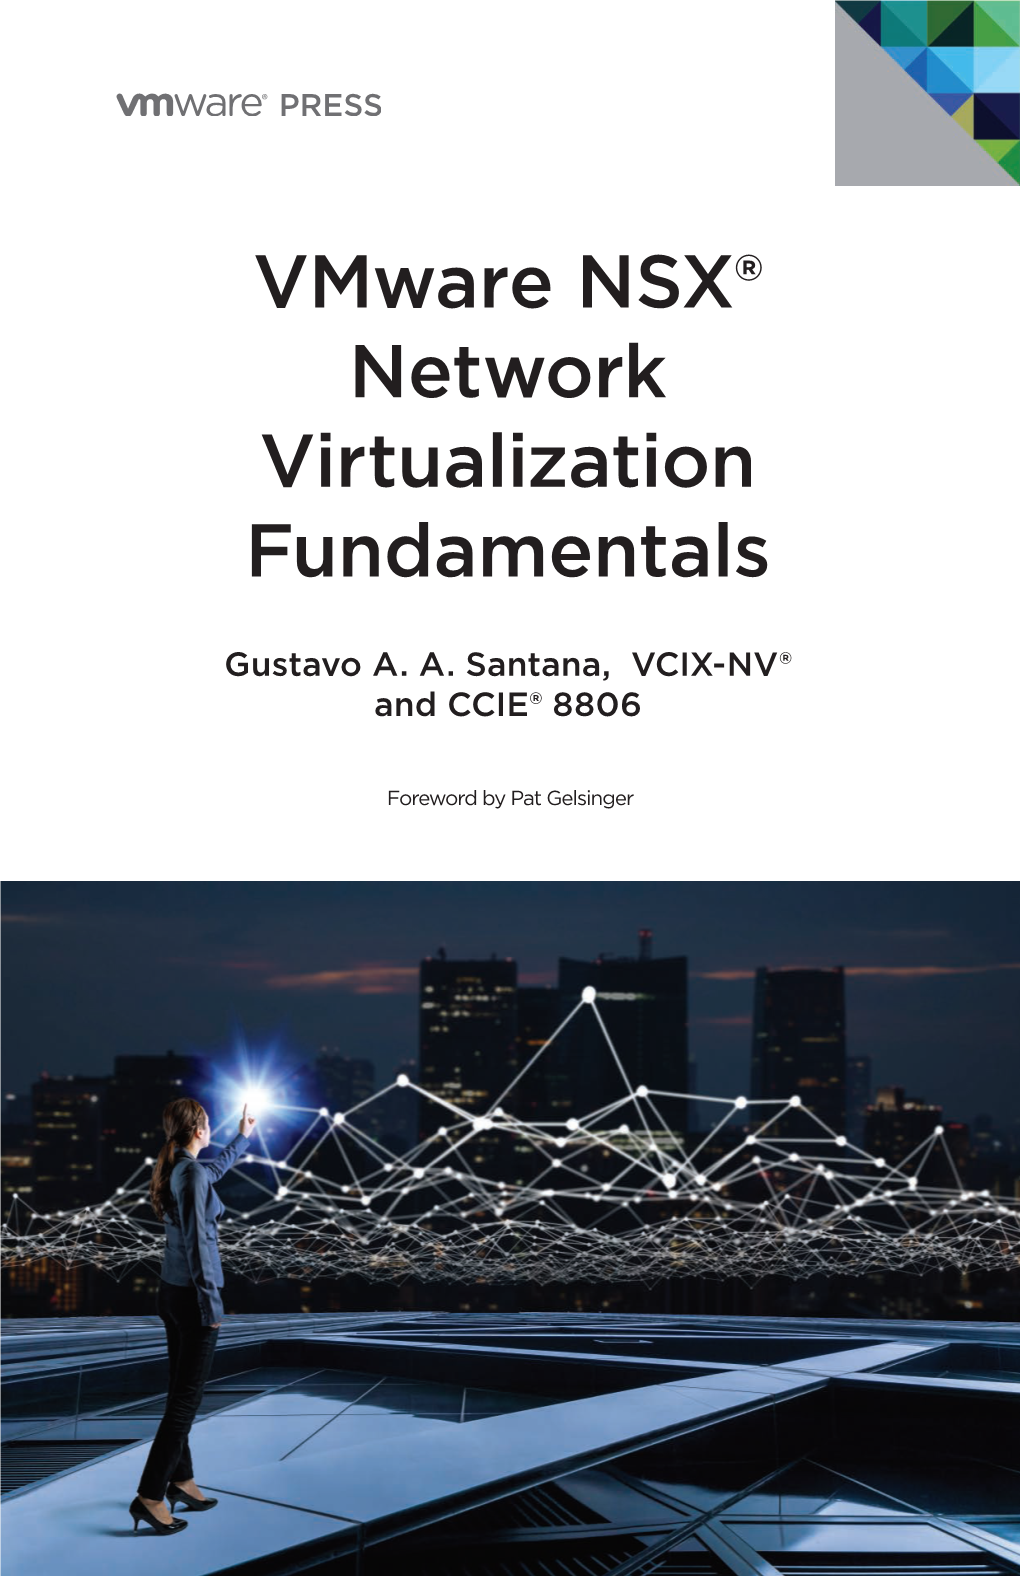 Vmware NSX® Network Virtualization Fundamentals